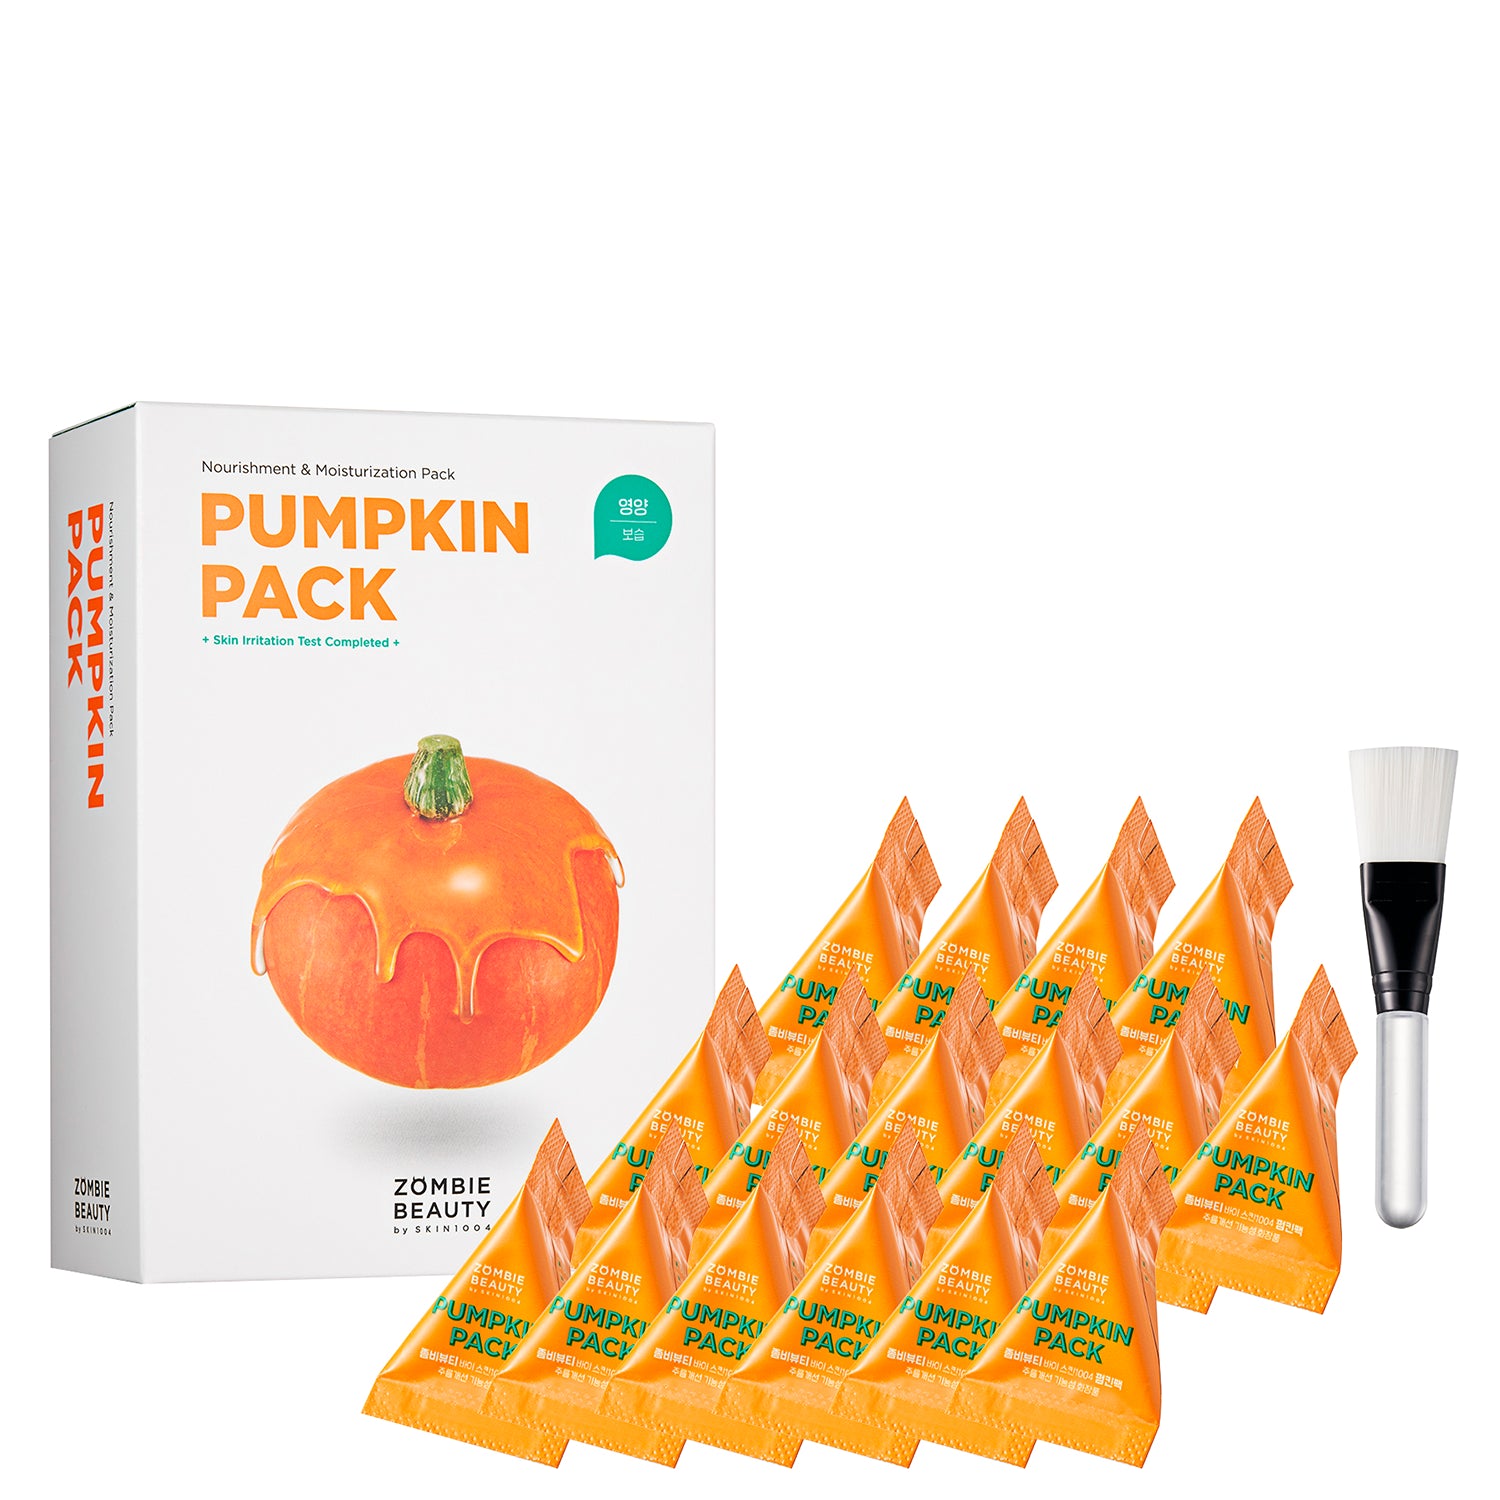 SKIN 1004 nourishment & moisturization pack pumpkin pack + skin irration test completed + zombie beauty